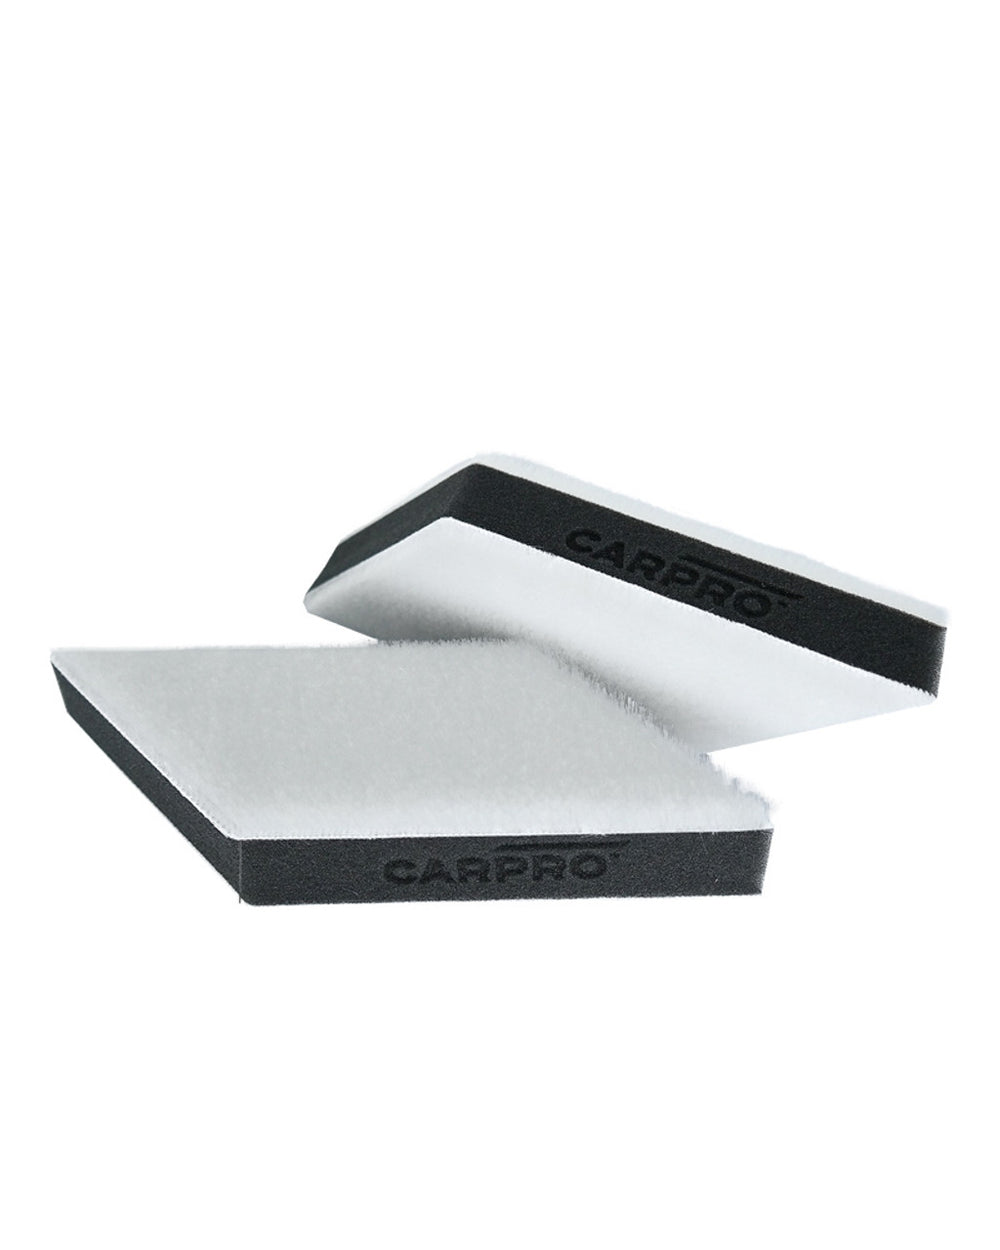 CARPRO - Microbuff Pad (Leather pad)